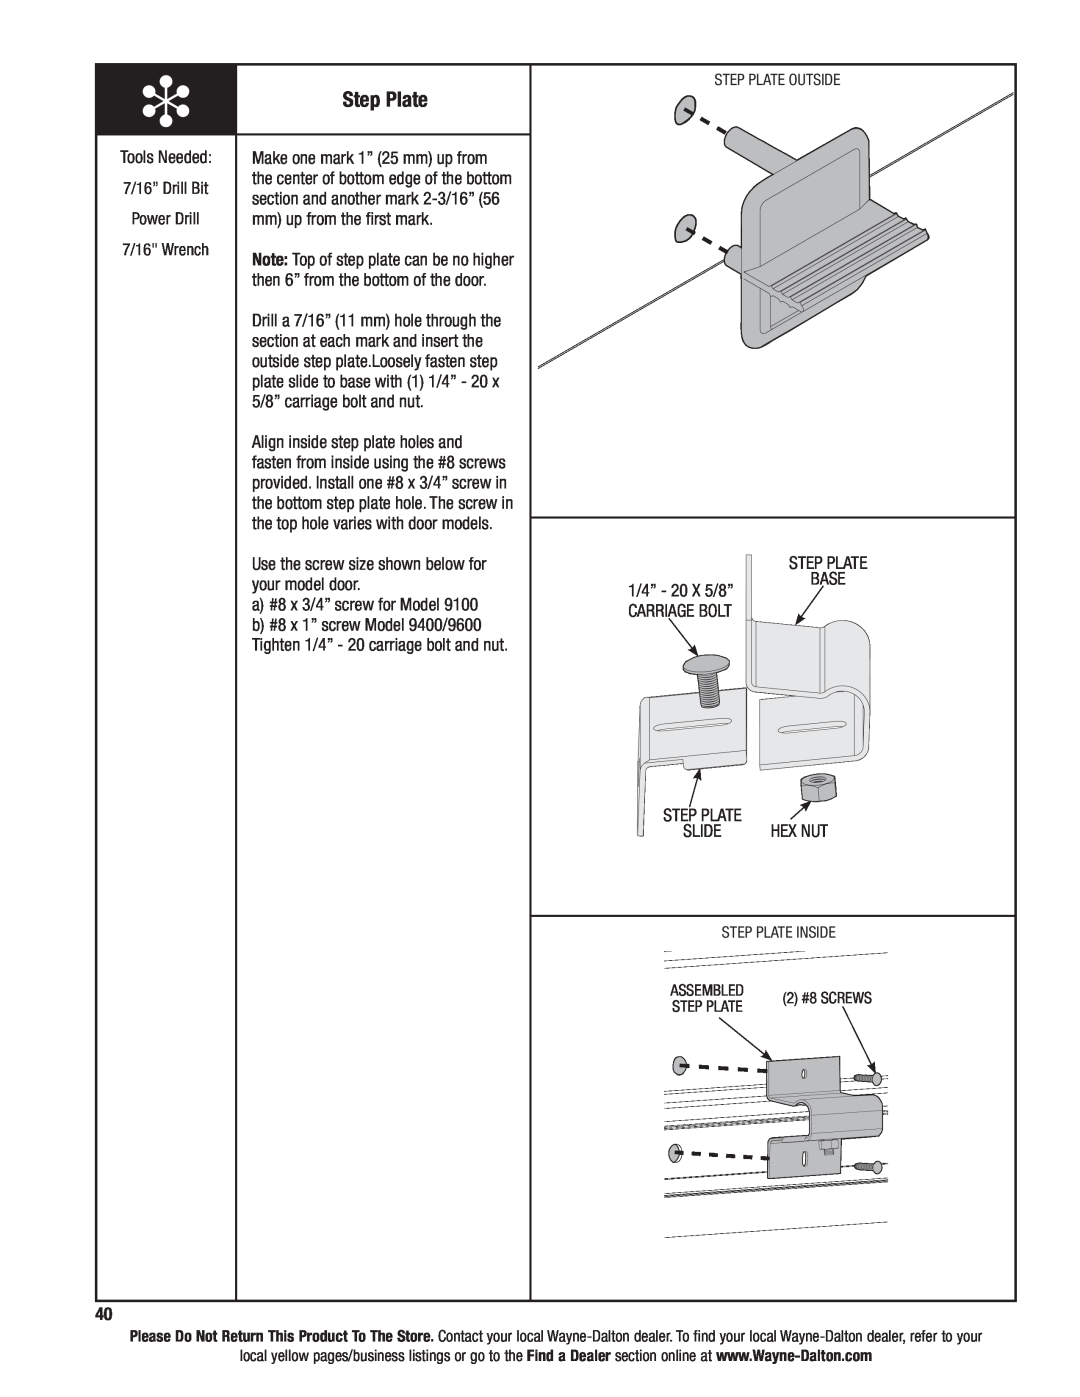 Wayne-Dalton 9400, AND 9600 installation instructions Step Plate 